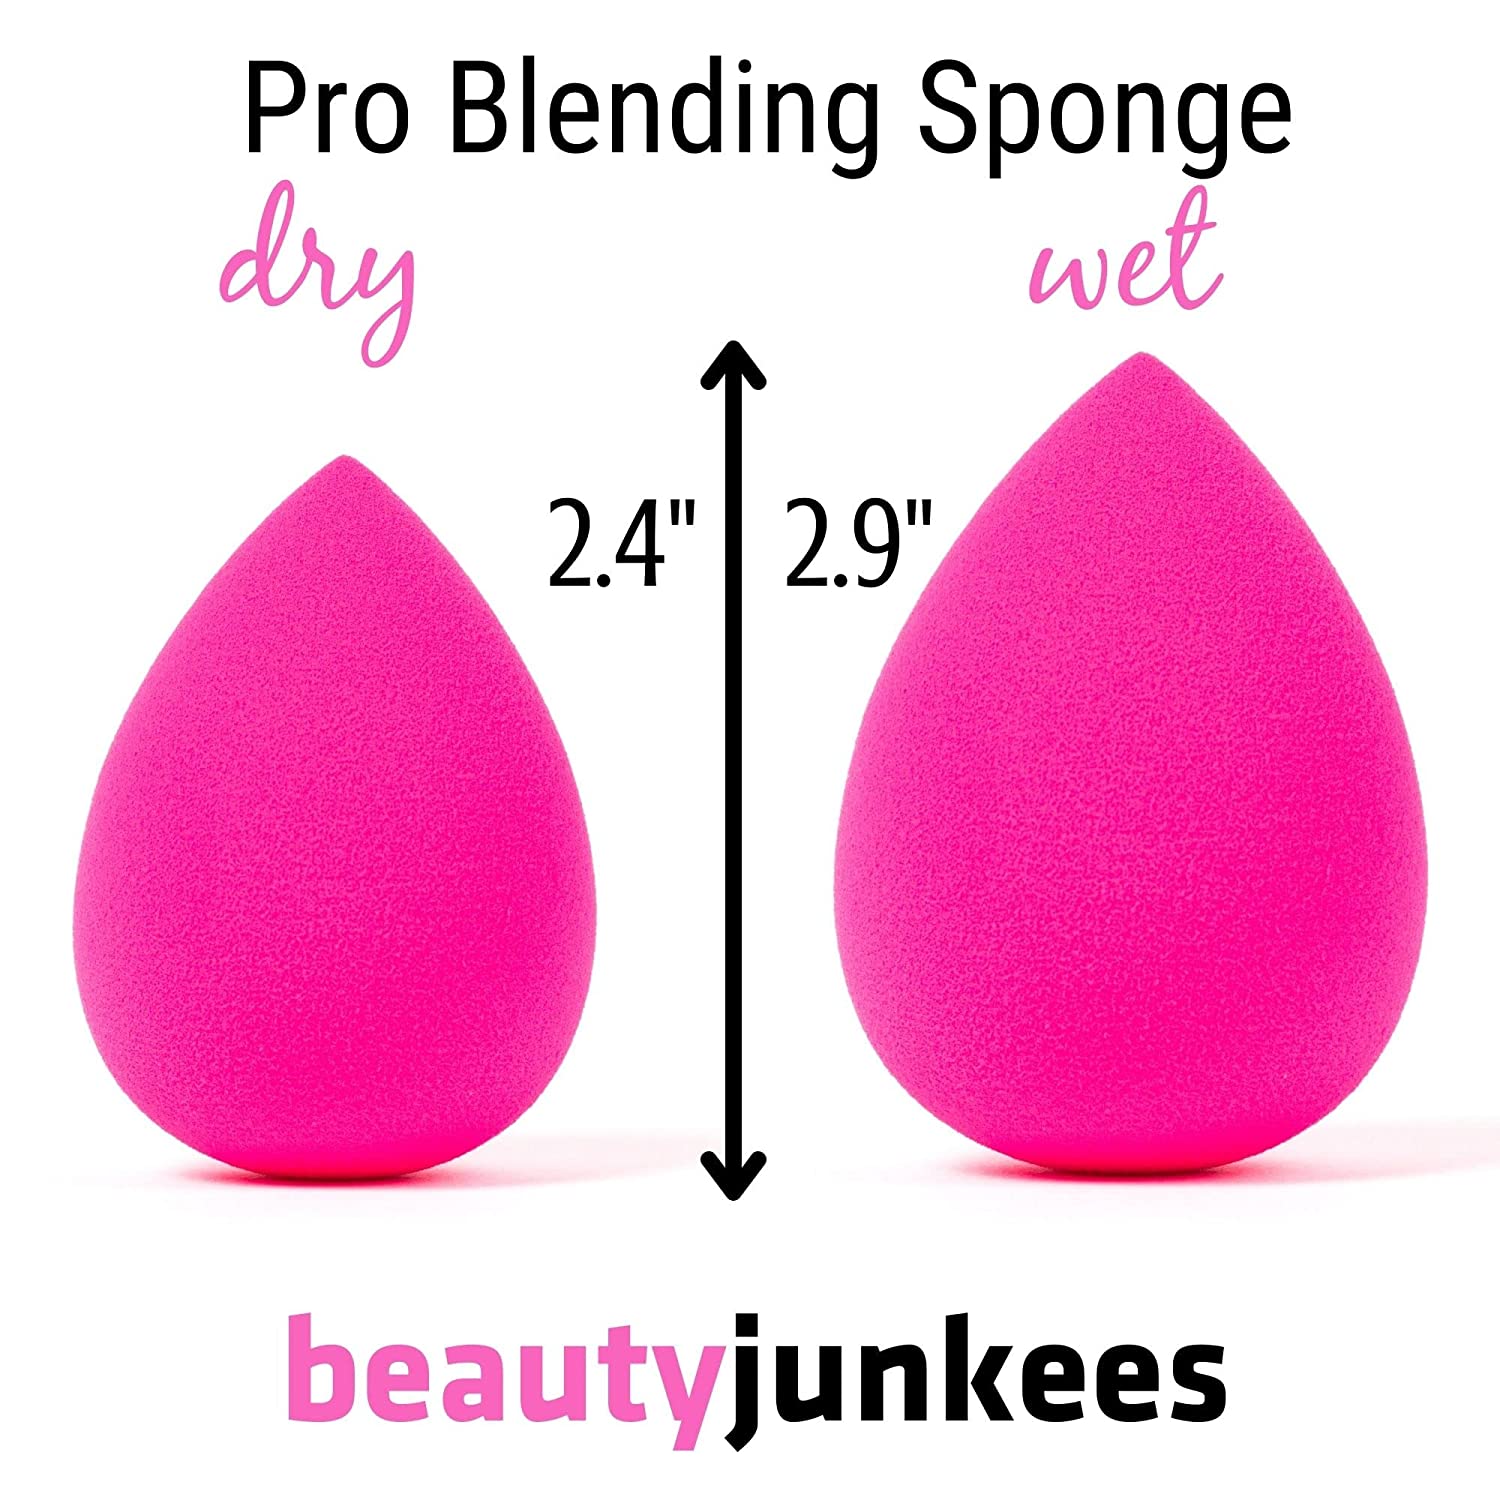 Southwit Makeup Sponge Blender - Pink Egg Foundation Makeup Blender Sponge, Liquid Cream Powder Contour Blending Sponges, Make Up Applicator, Cosmetic Blenders, Wet Dry Beauty Sponge, Latex Free - image 5 of 5